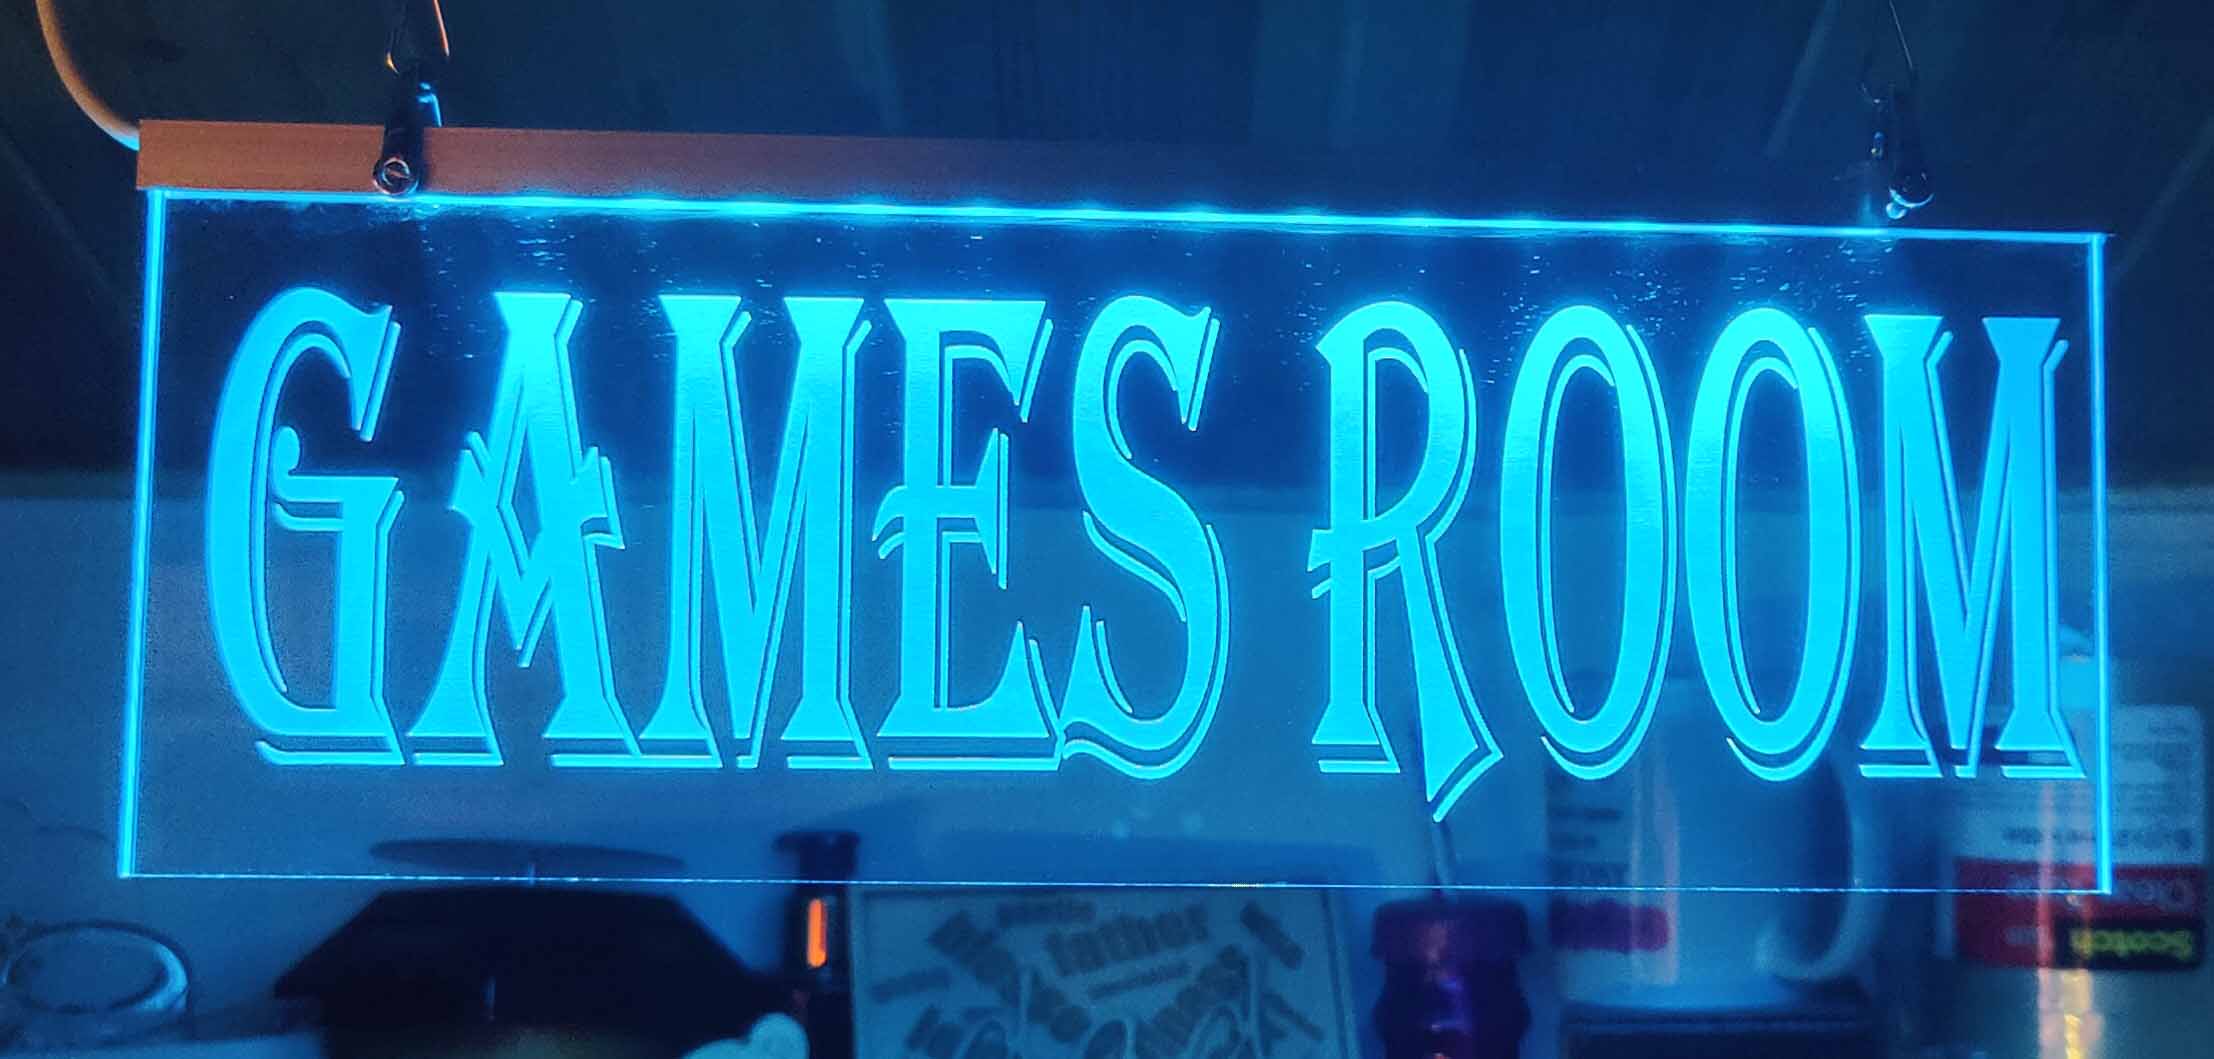 games room led light up bar sign great for mncaves bars pubs